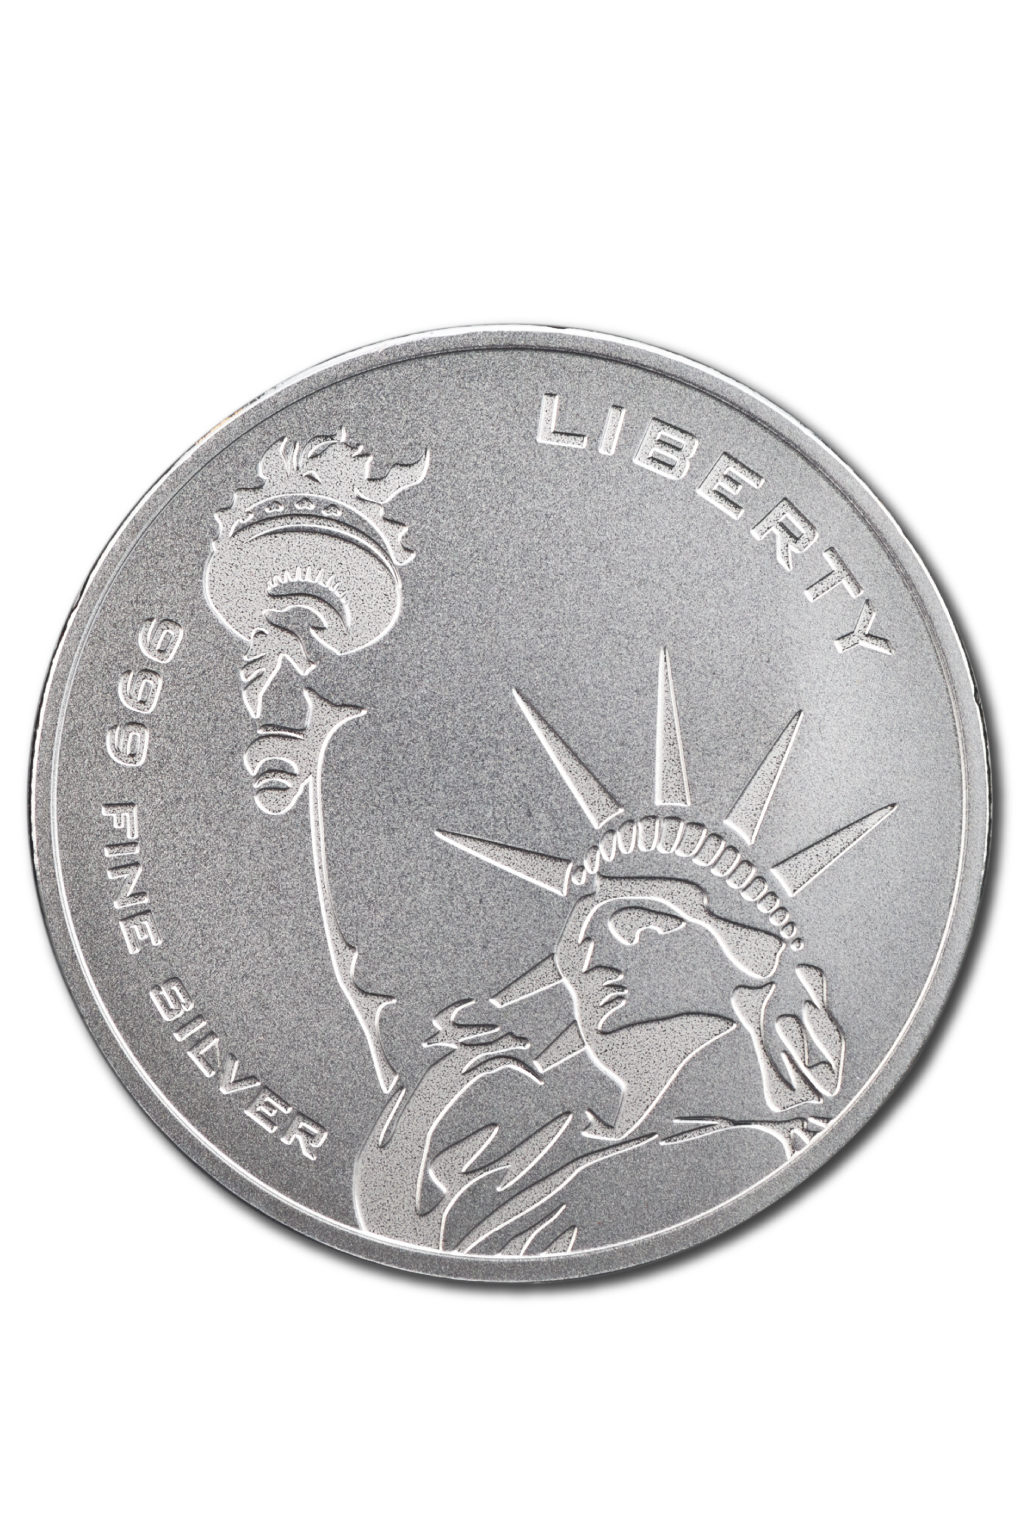 Freedom Liberty 1 oz Silver Round